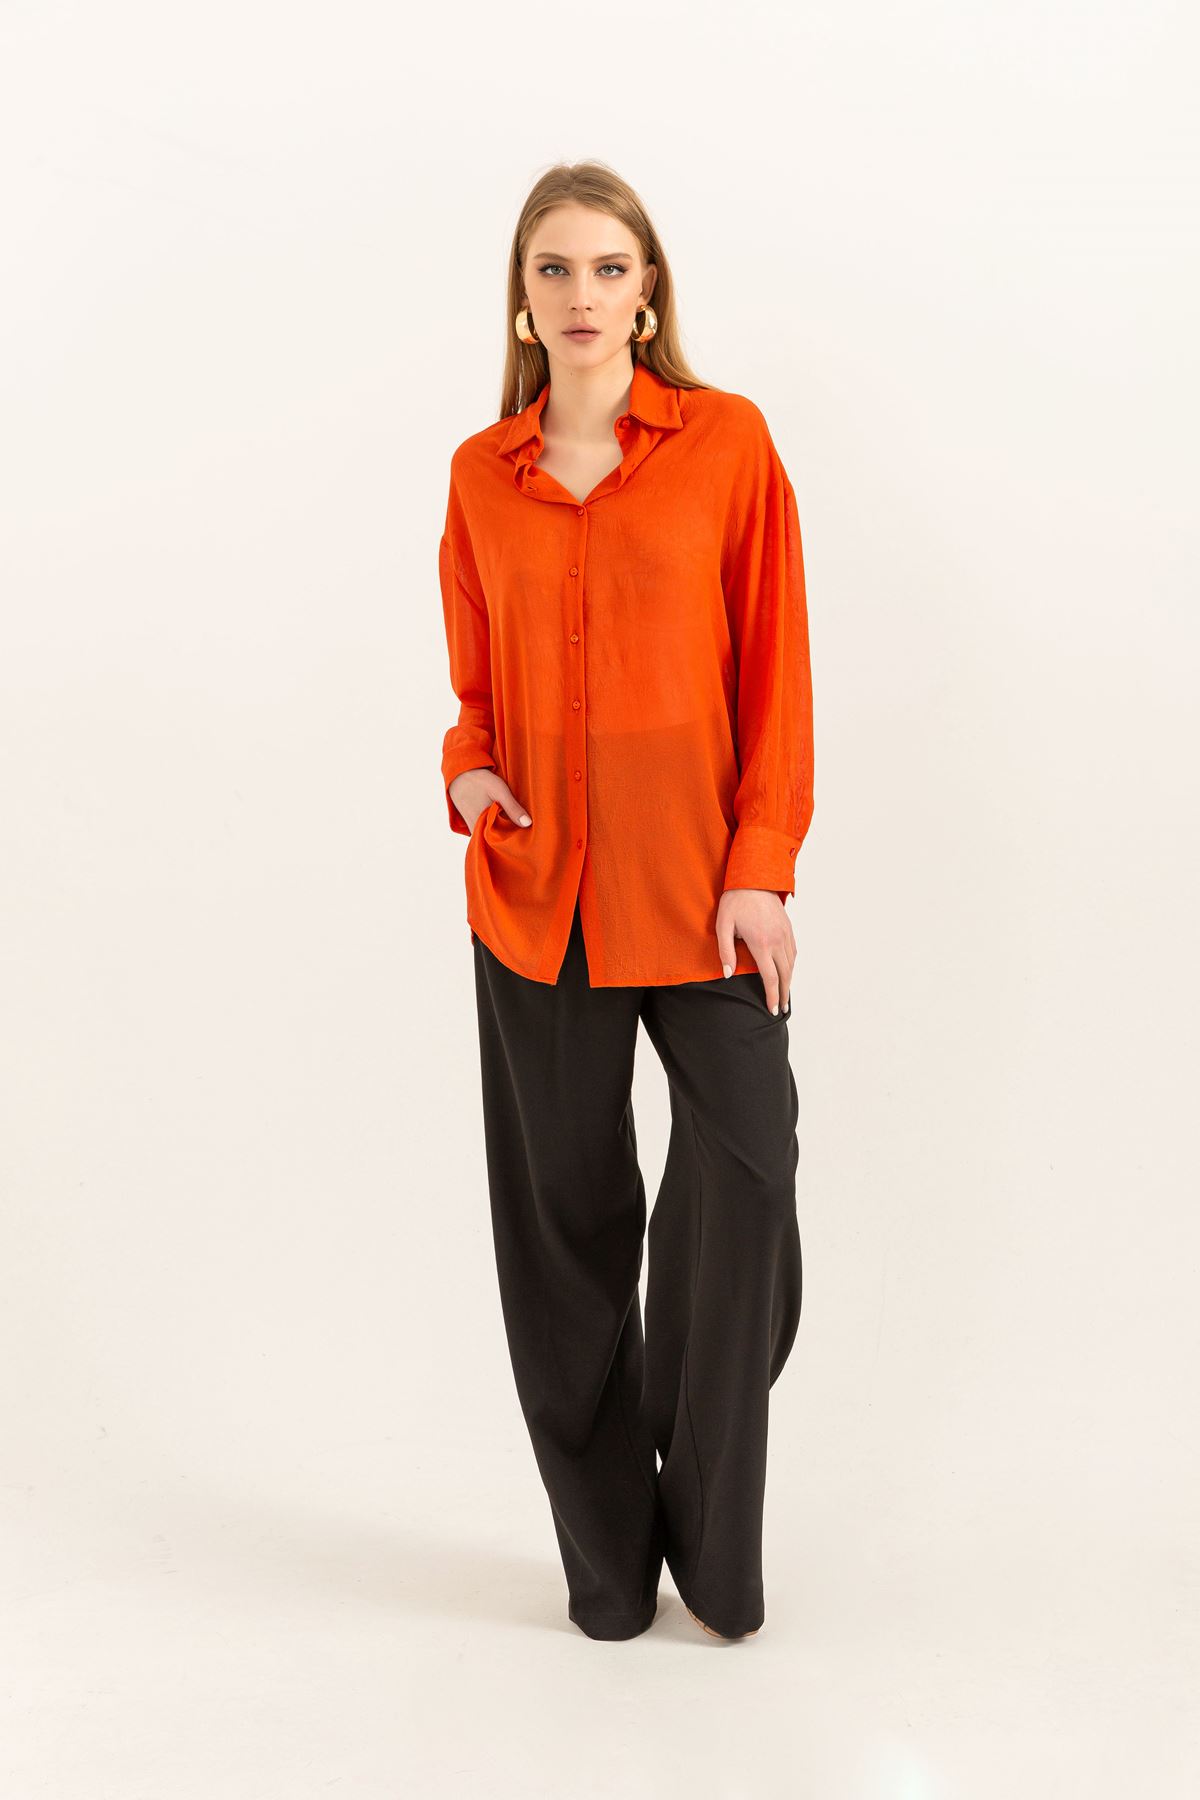 Chiffon Fabric Long Sleeve Oversize Women Shirt-Orange